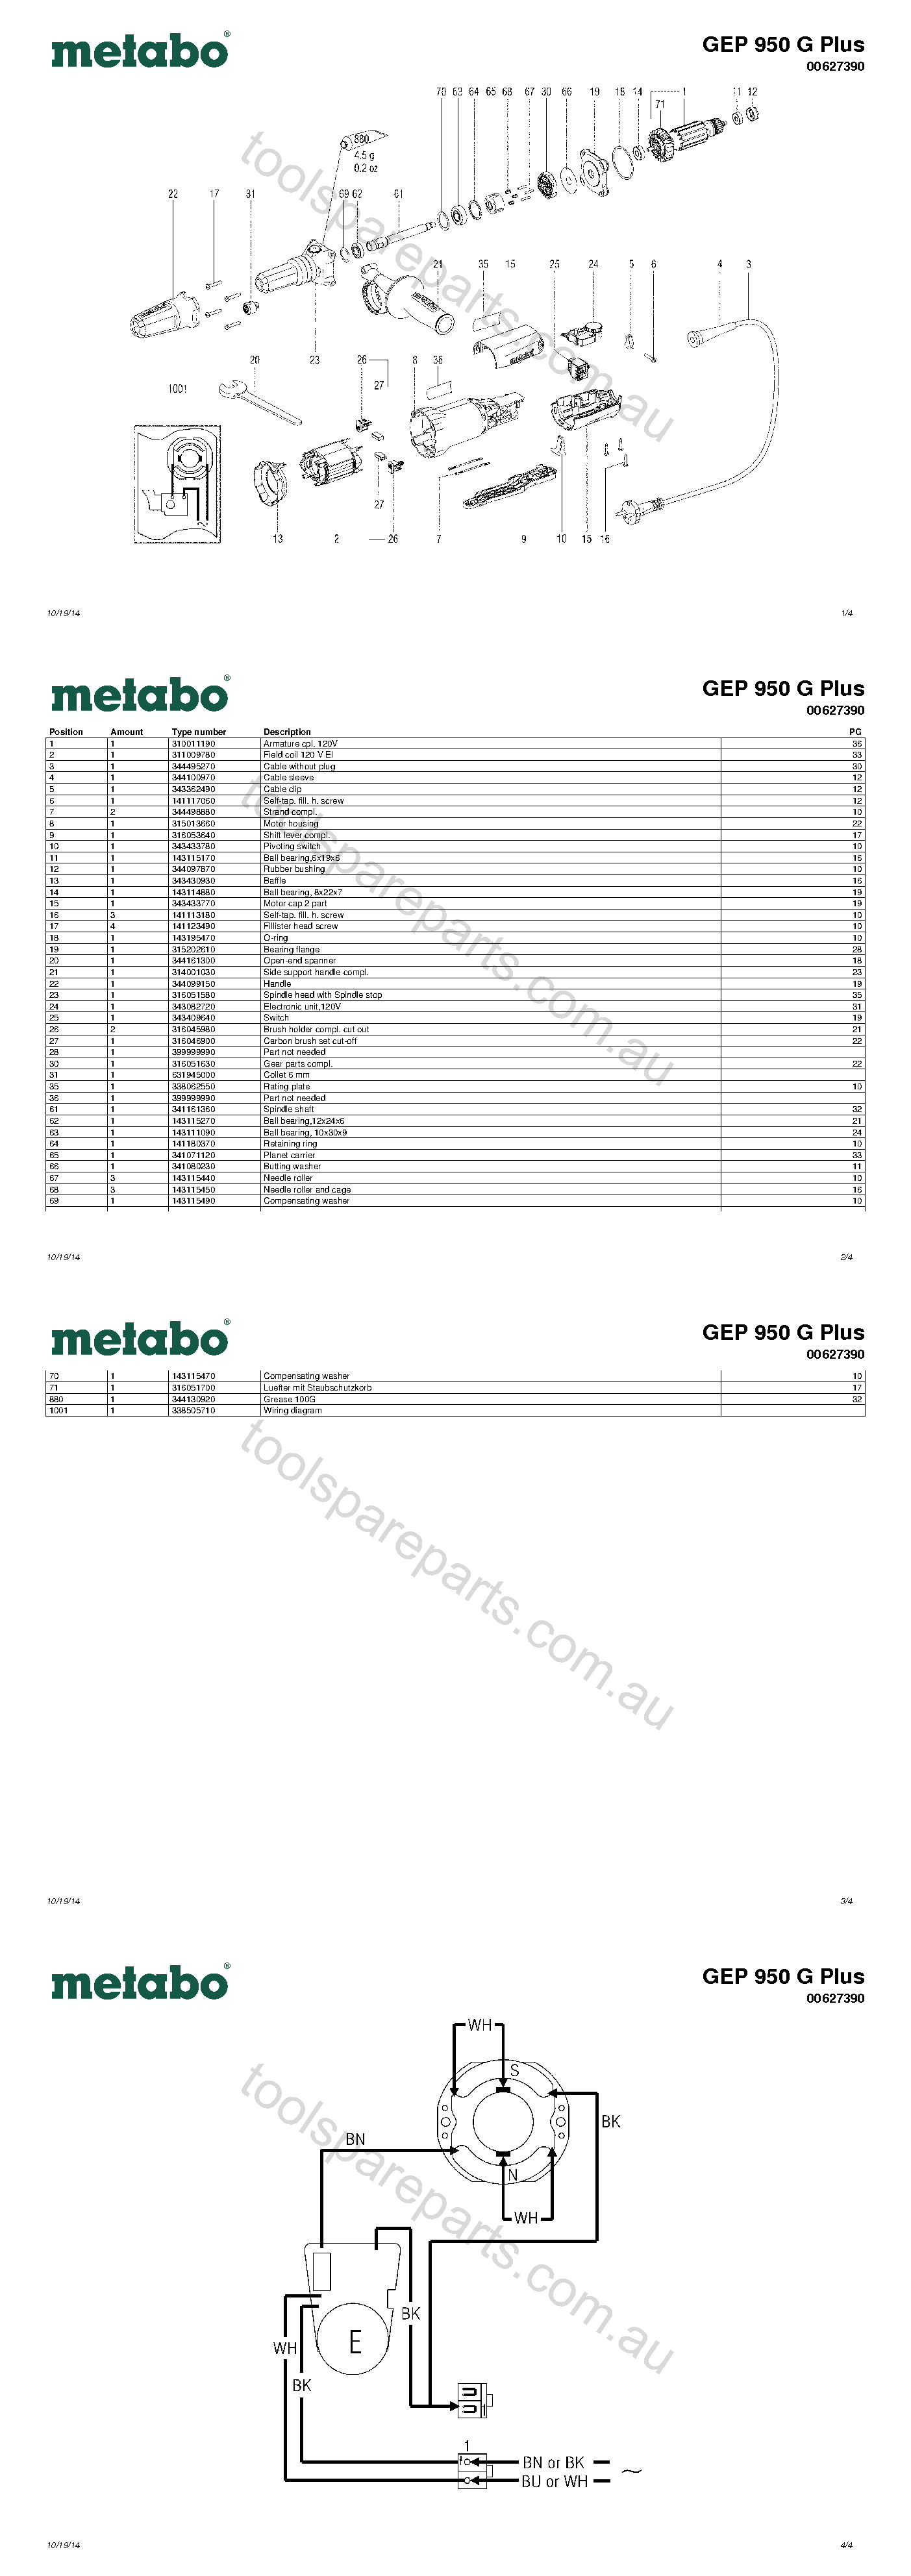 Metabo GEP 950 G Plus 00627390  Diagram 1